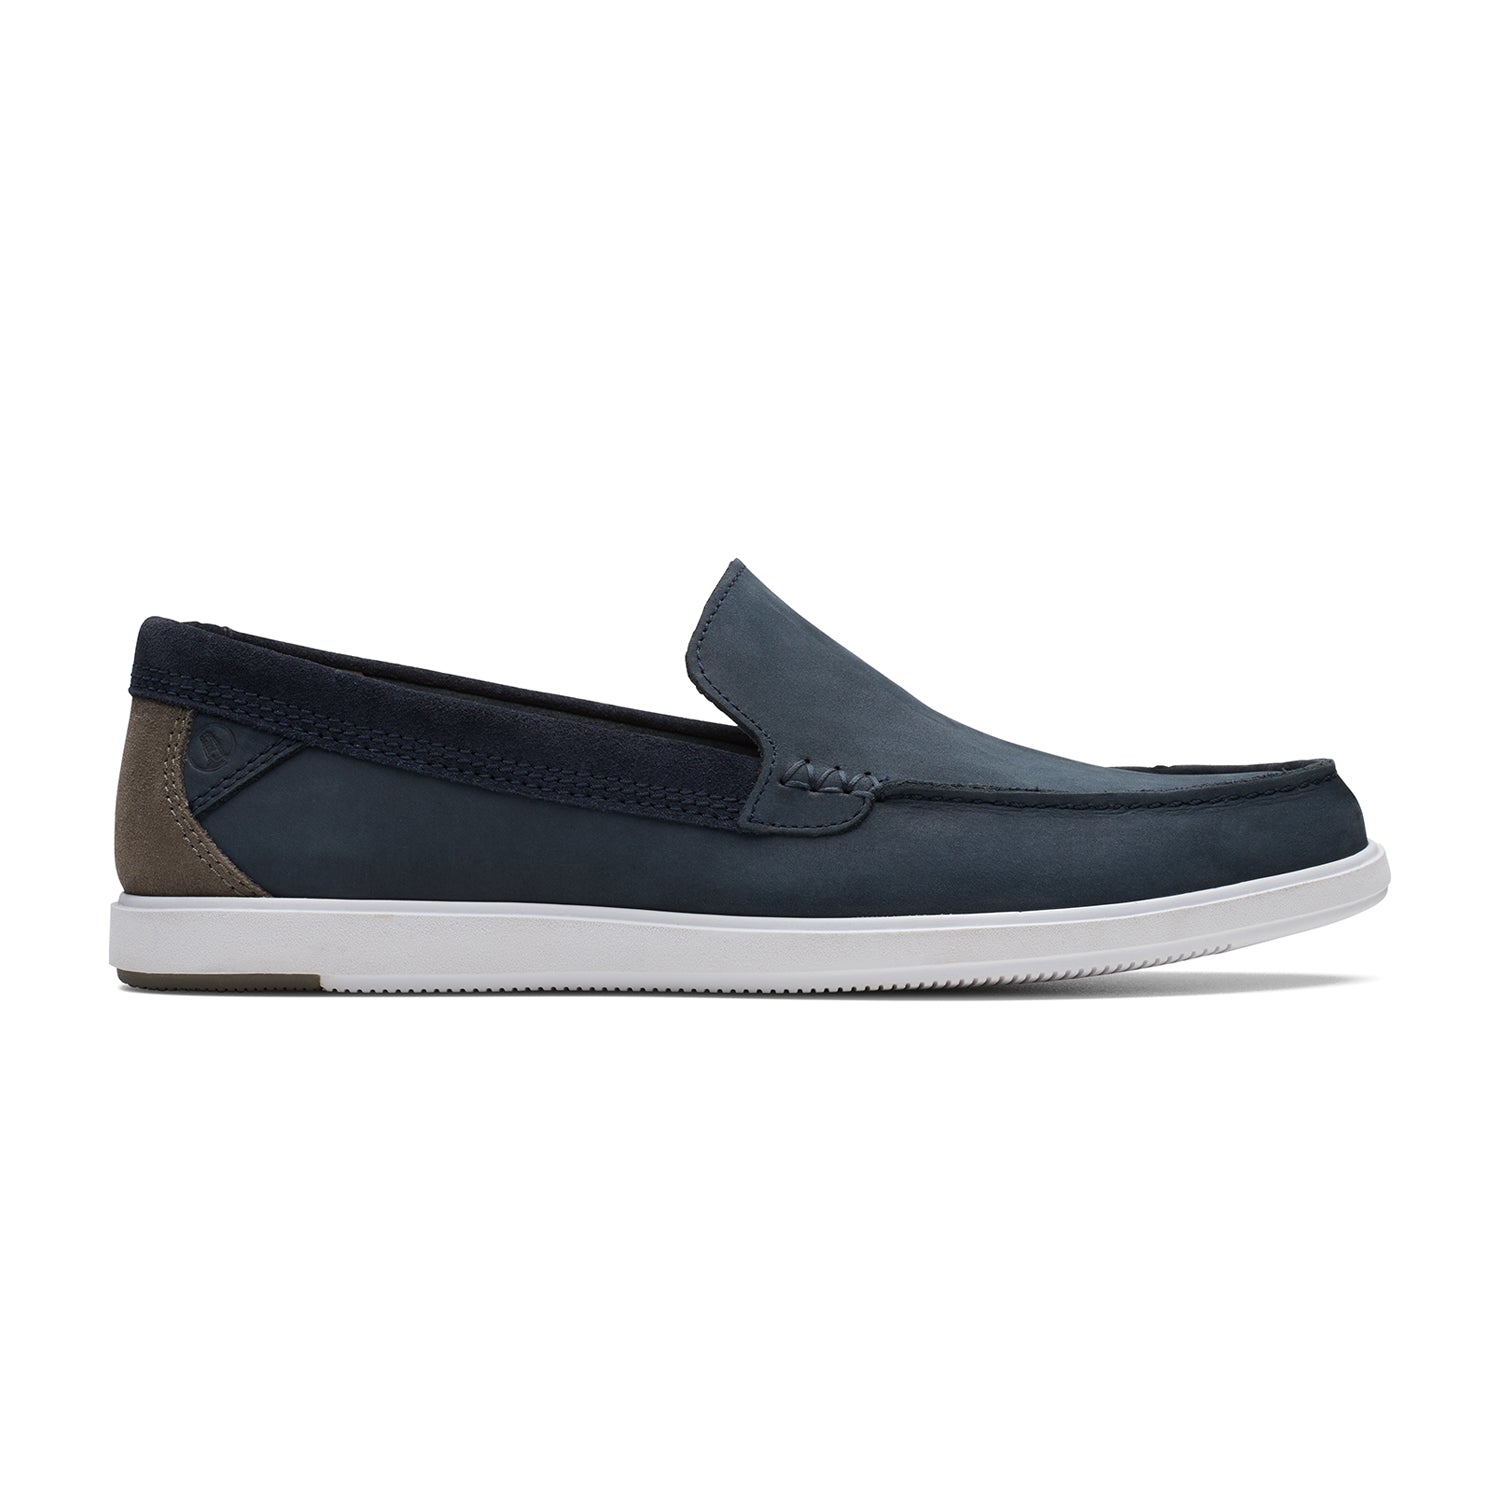 Clarks Bratton Loafer Shoes - Navy Nubuck - 261724487 - G Width (Standard Fit)